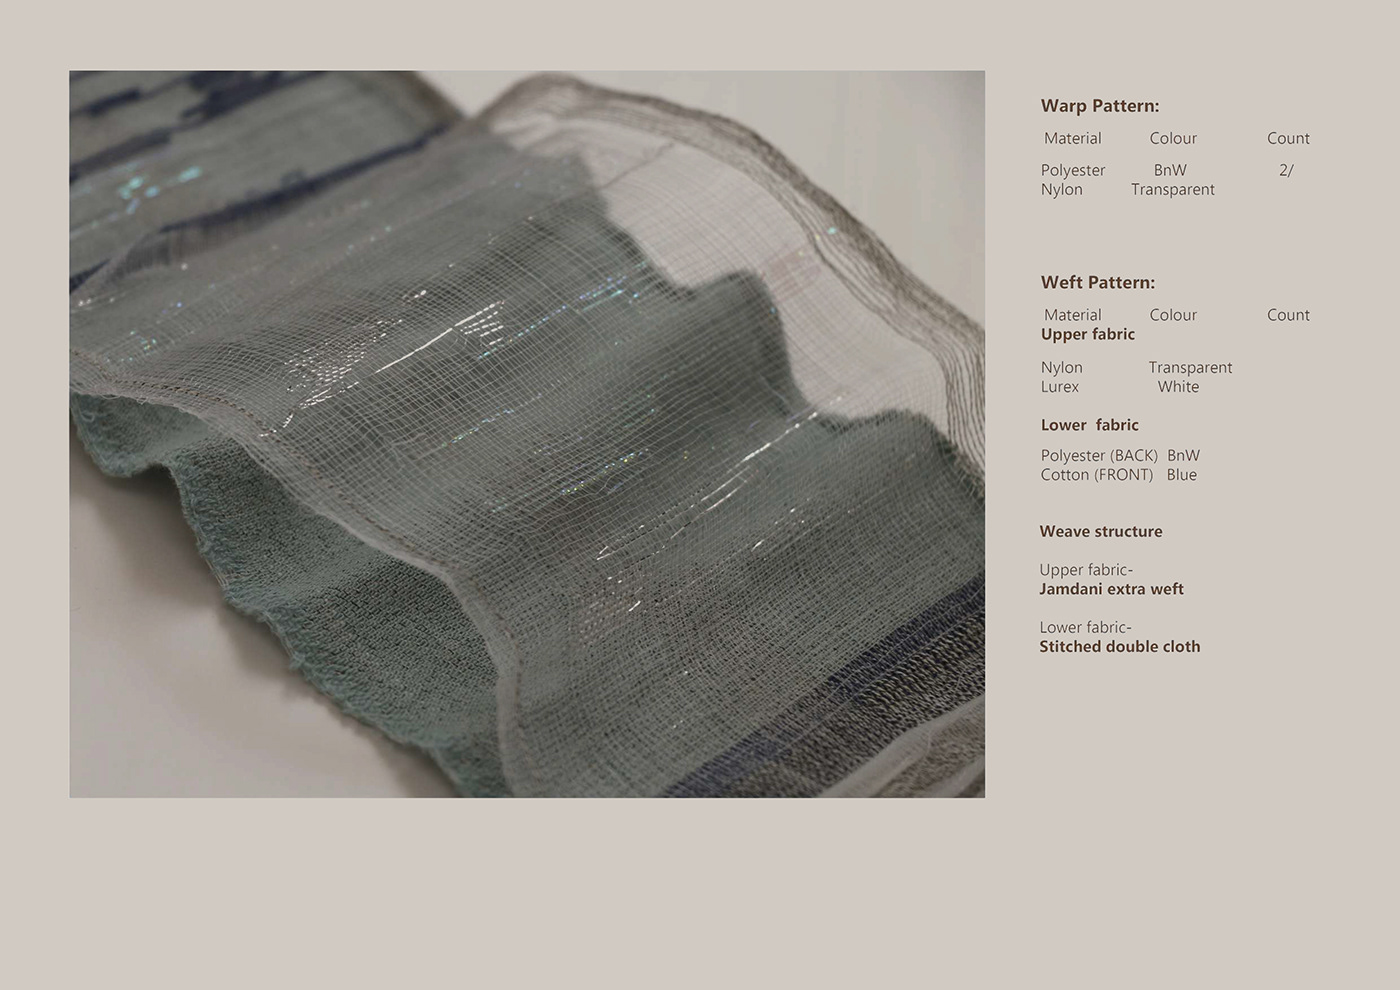 Advance weaving delicate double cloth fabric Fragile Jamdani weaving layers textile water weaving